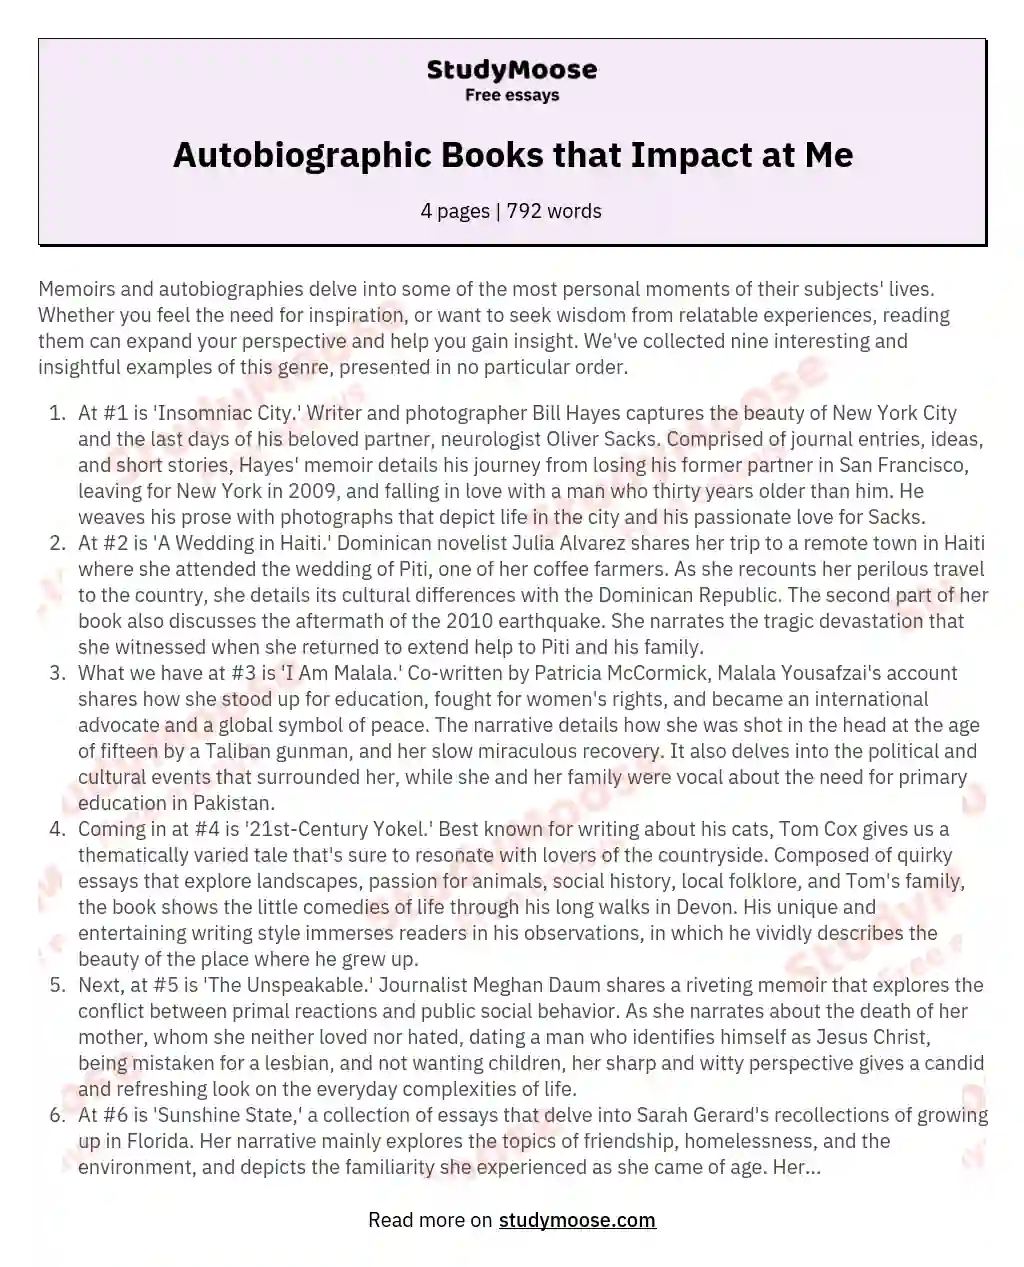 Autobiographic Books that Impact at Me essay